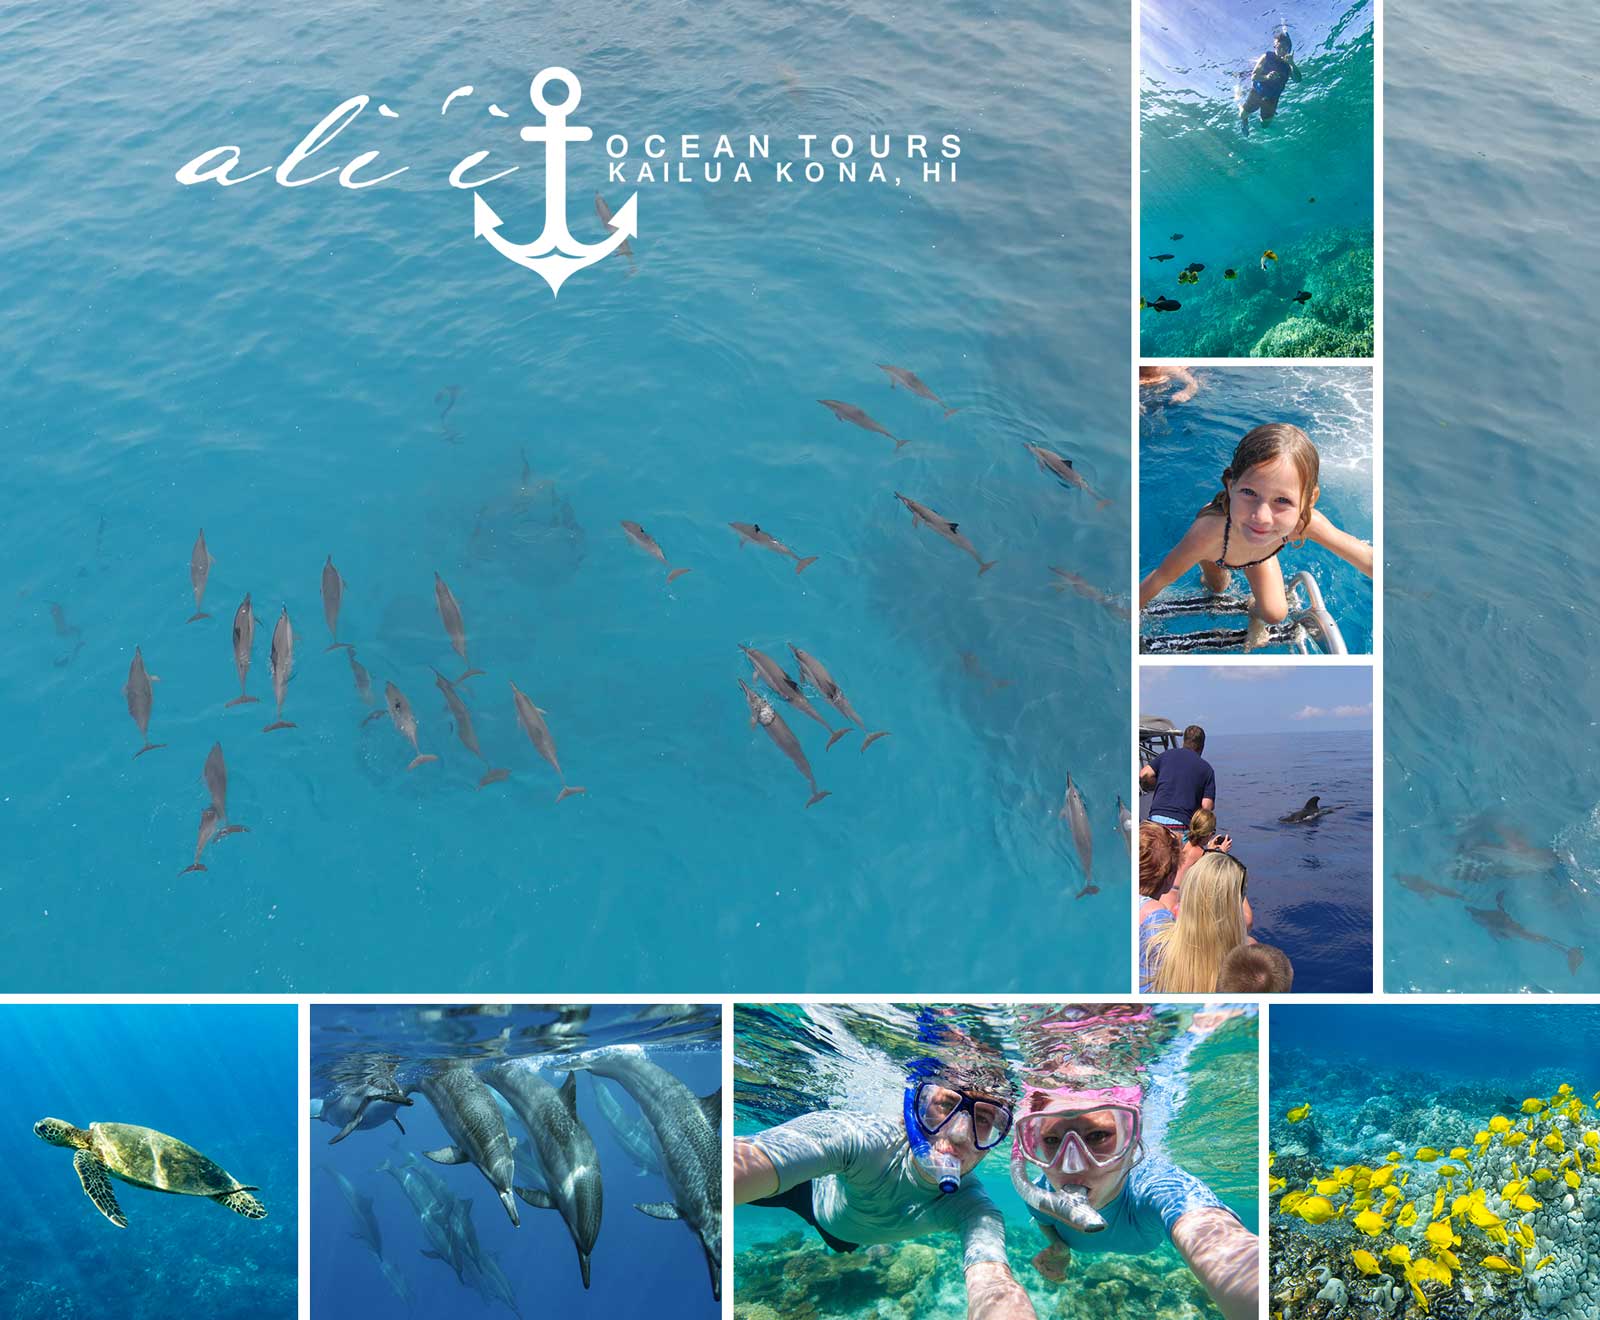 Ali'i Ocean Tours - Kailua Kona, Hawaii